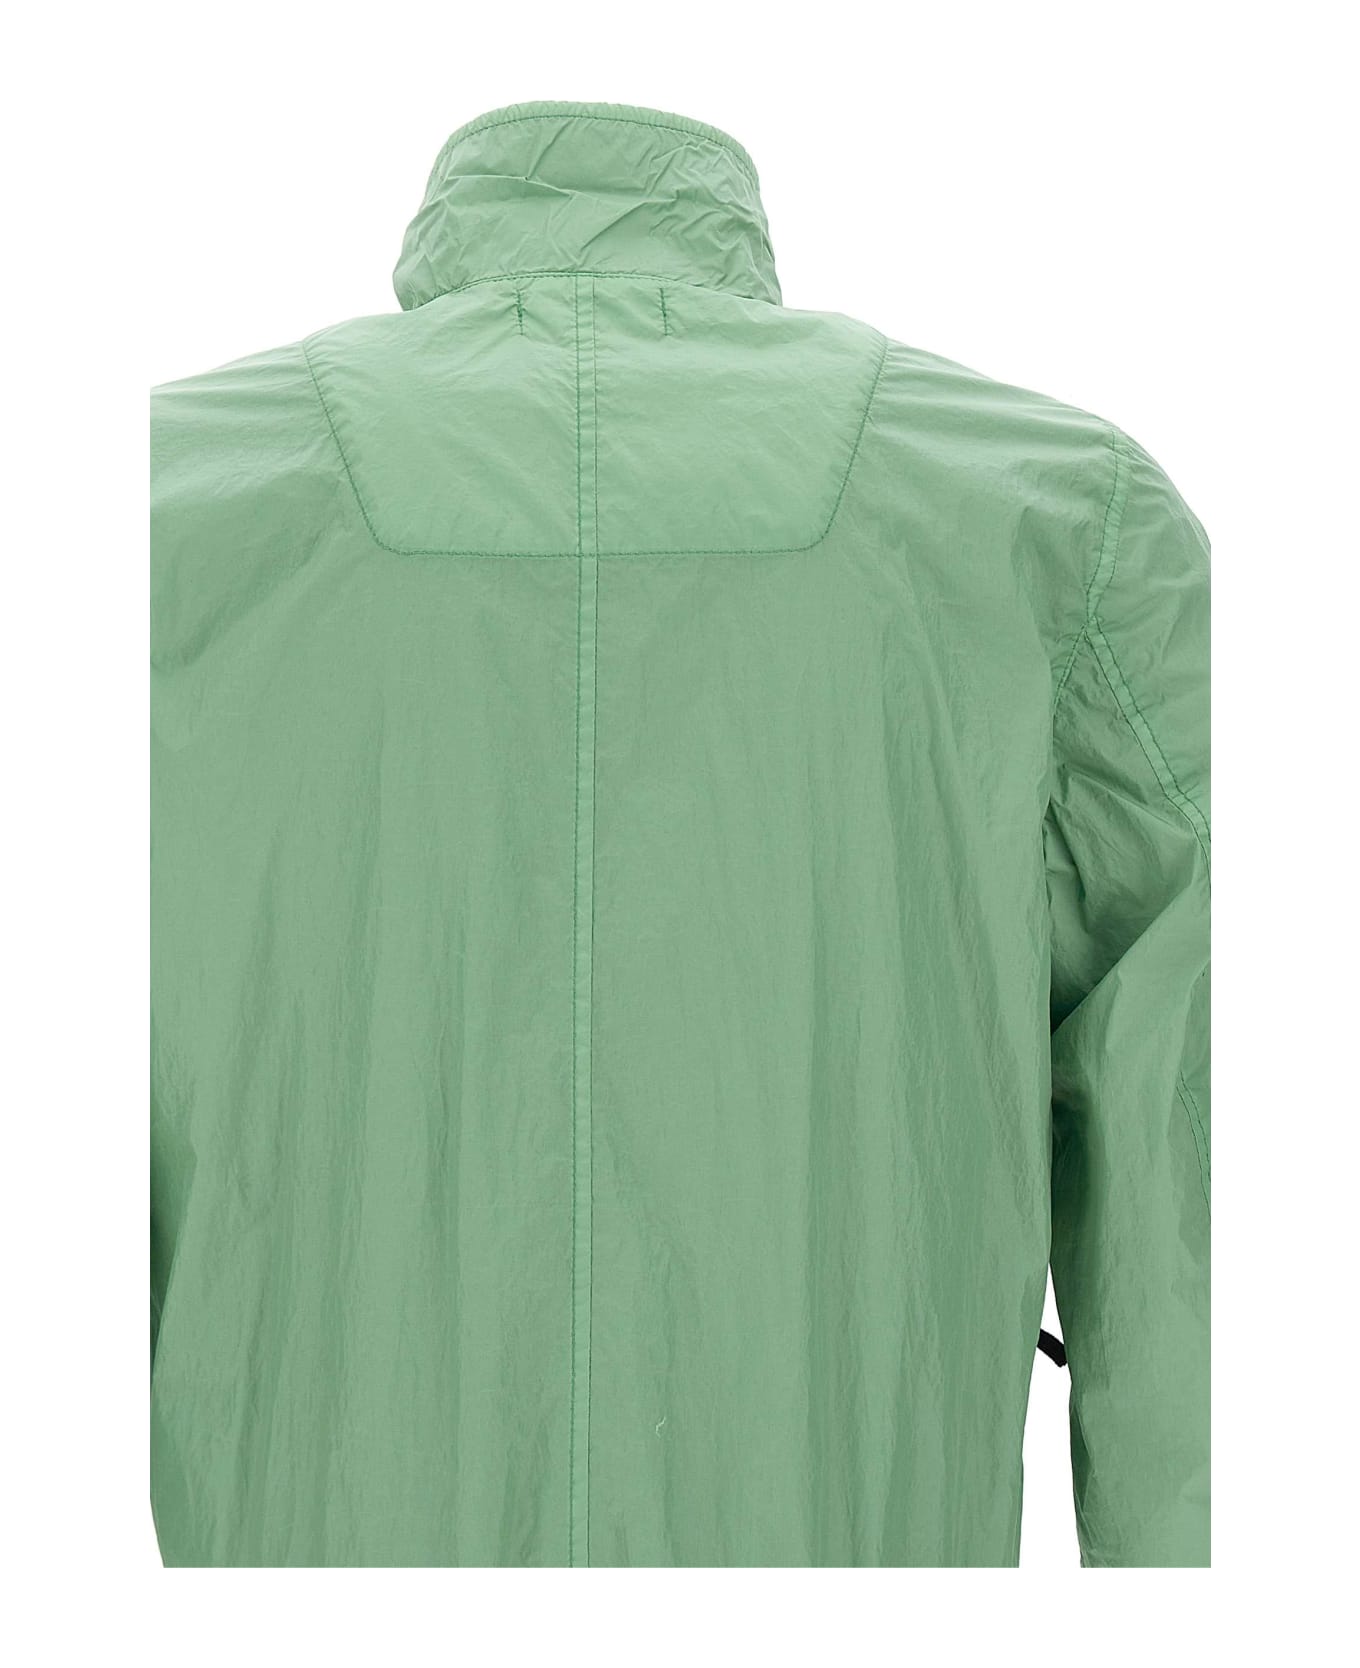 Stone Island Garment Dyed Crinkle Reps Ny Jacket - GREEN